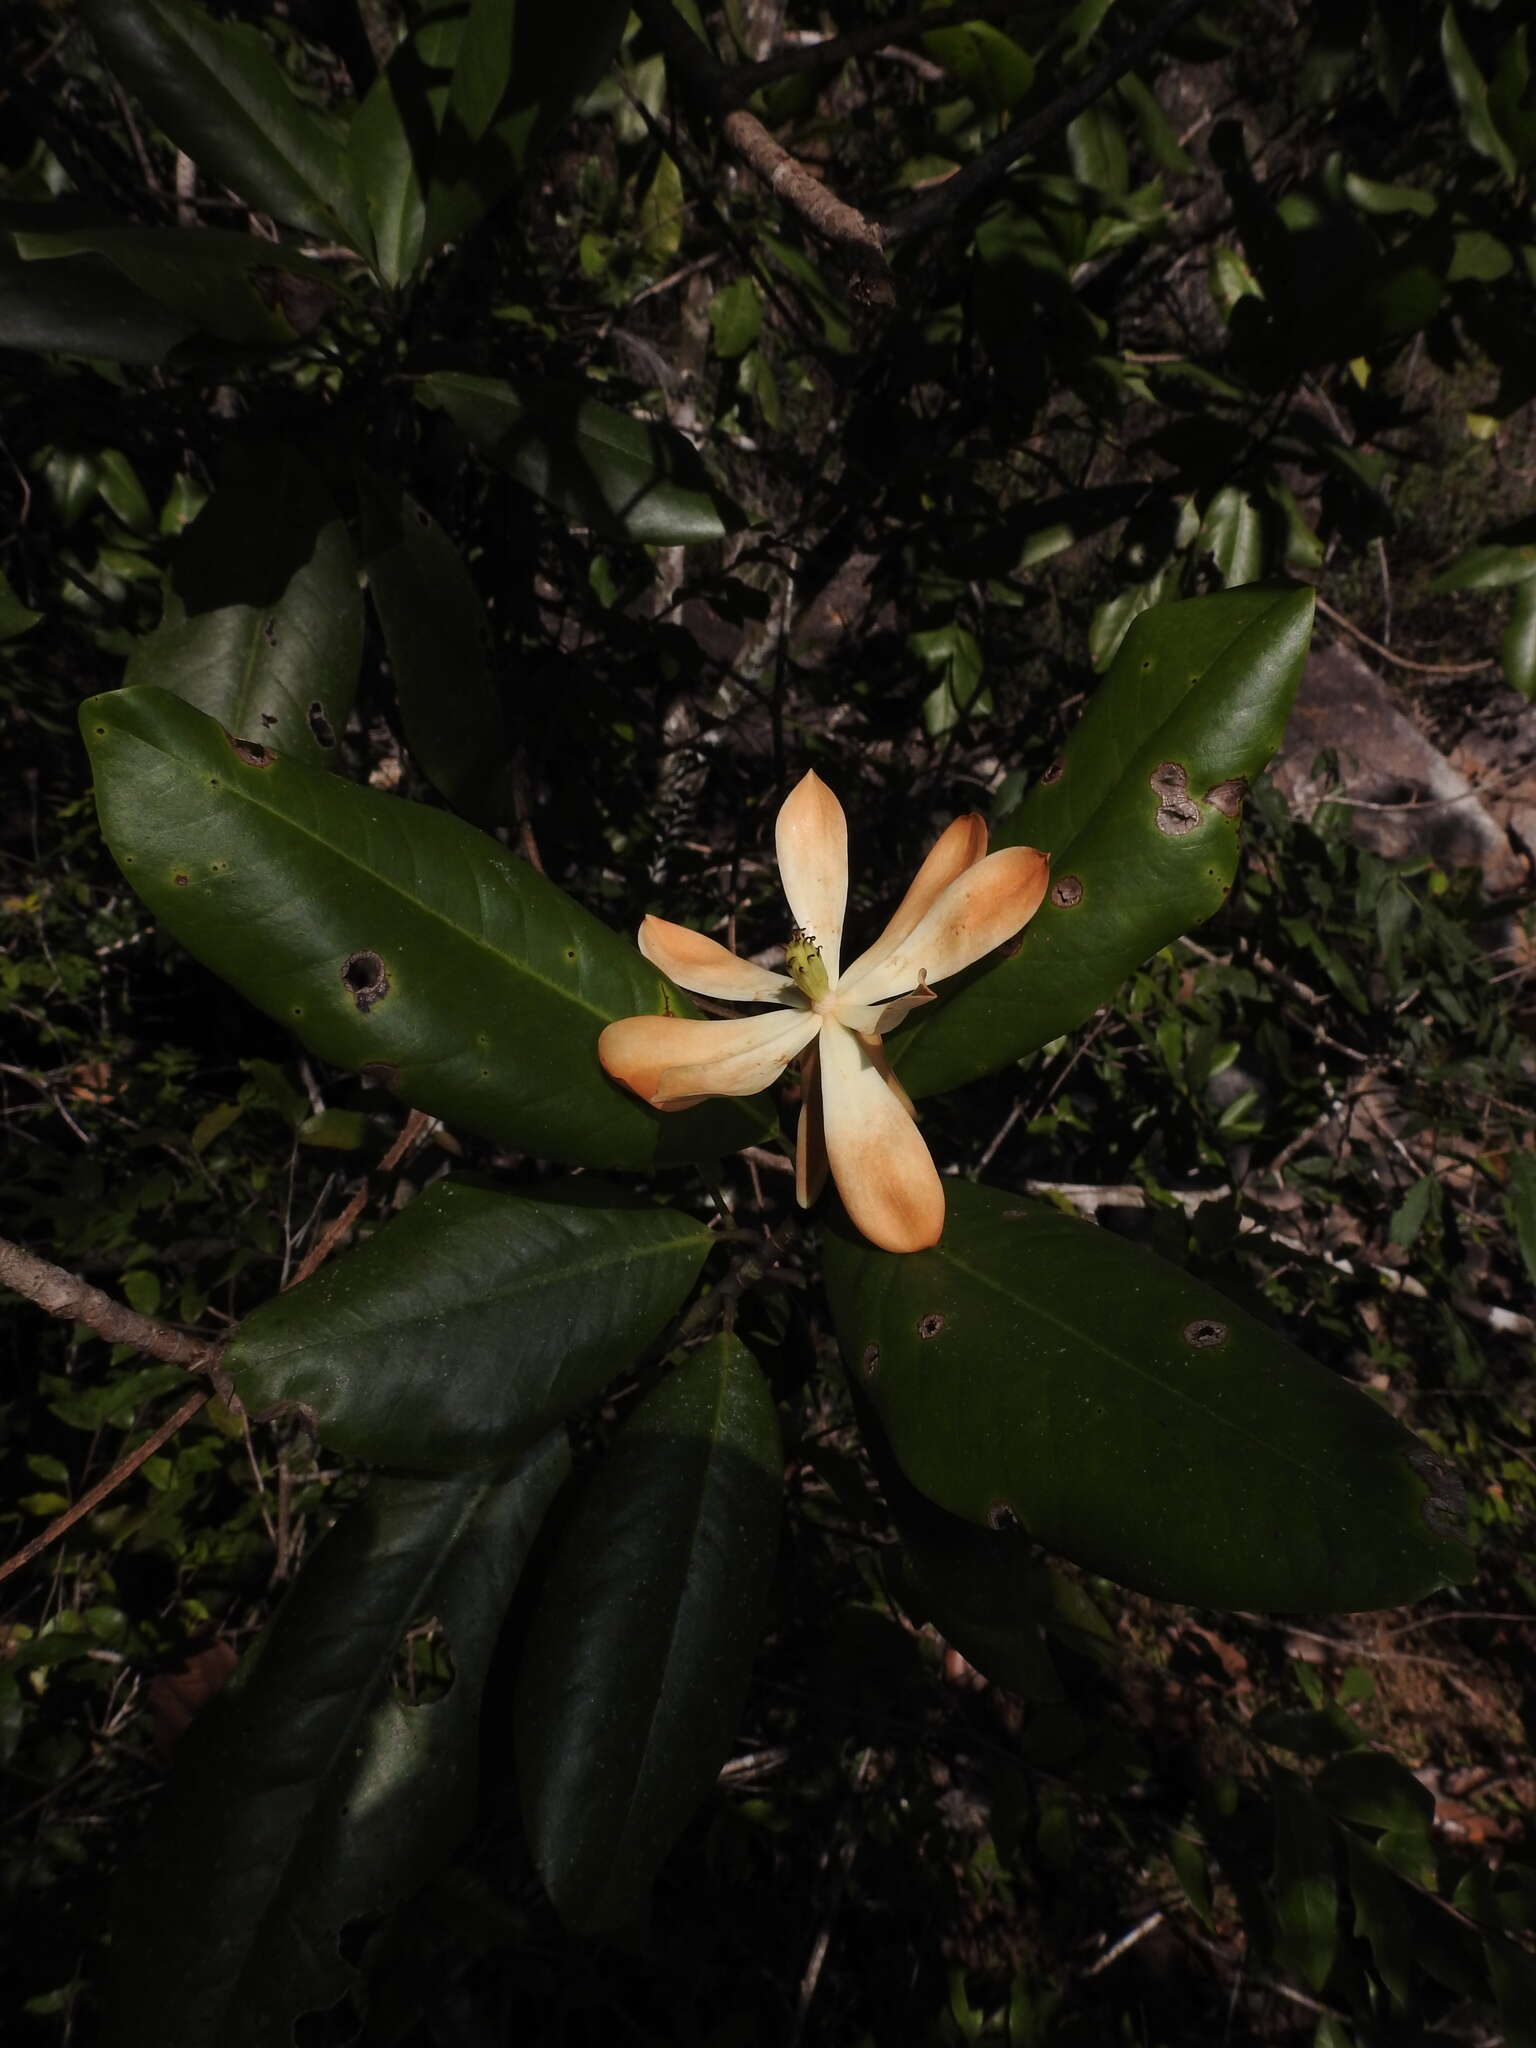 Image of Magnolia pacifica subsp. pacifica